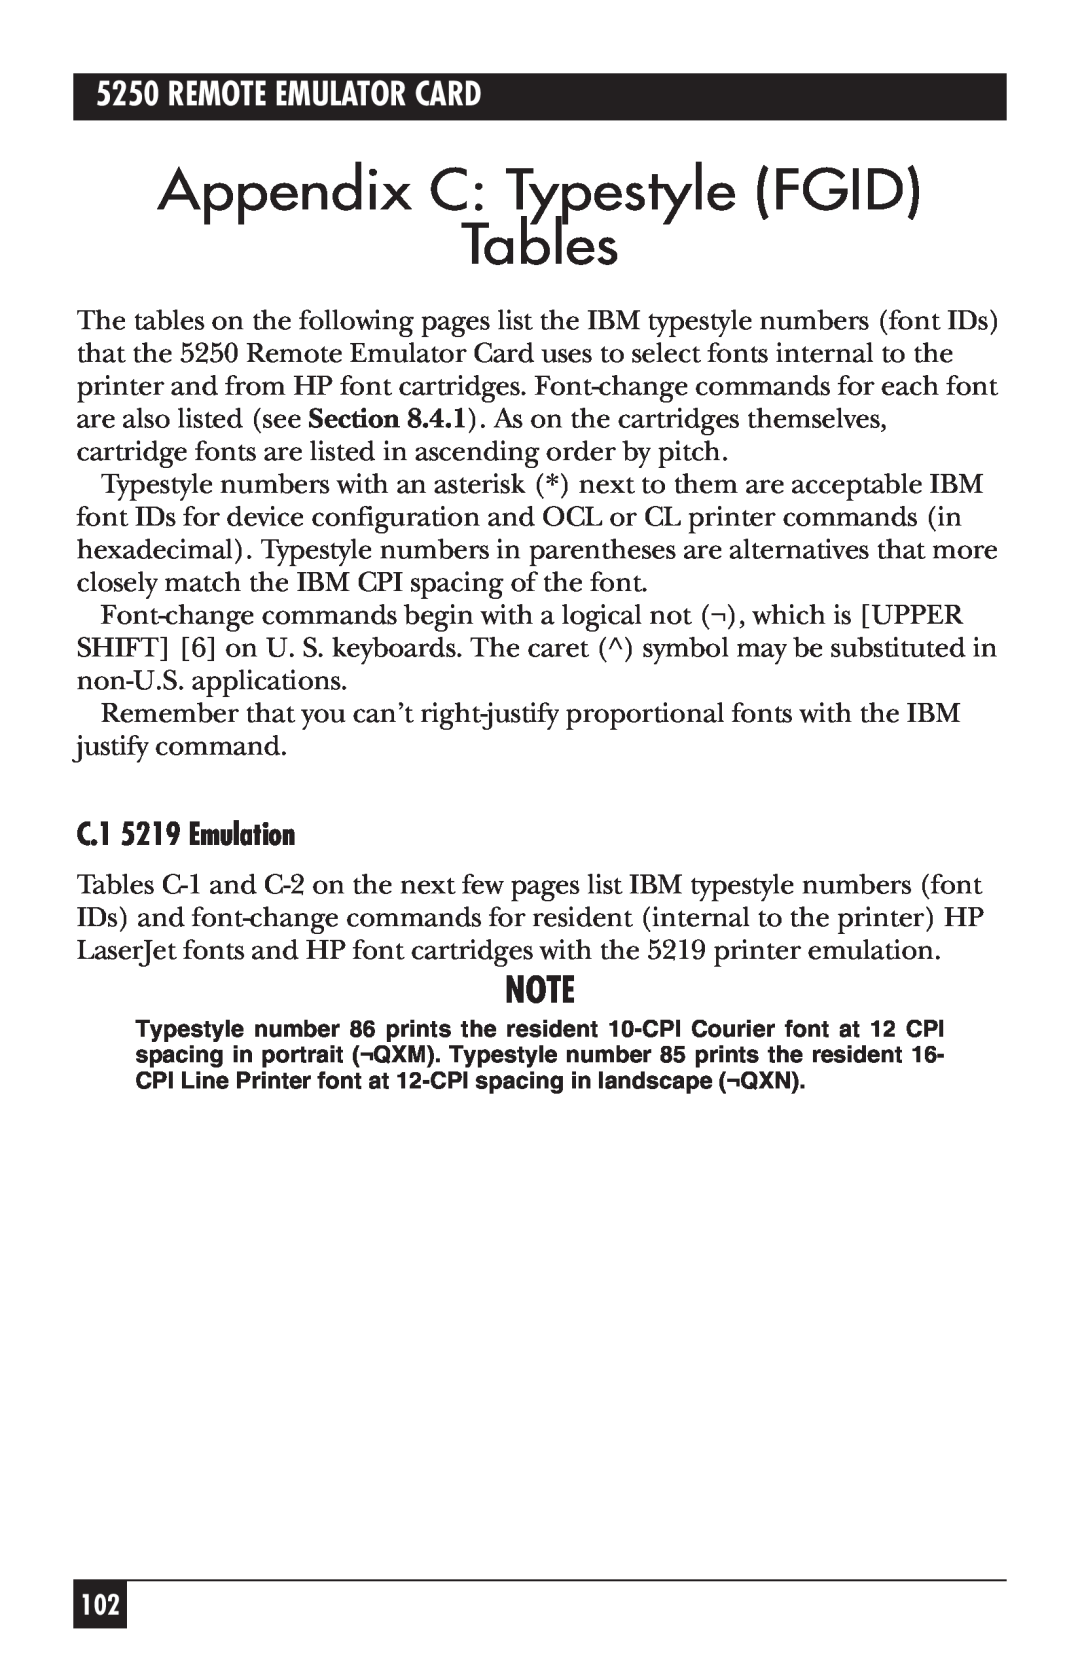 Black Box 5250 manual Appendix C: Typestyle FGID Tables, C.1 5219 Emulation, Remote Emulator Card 